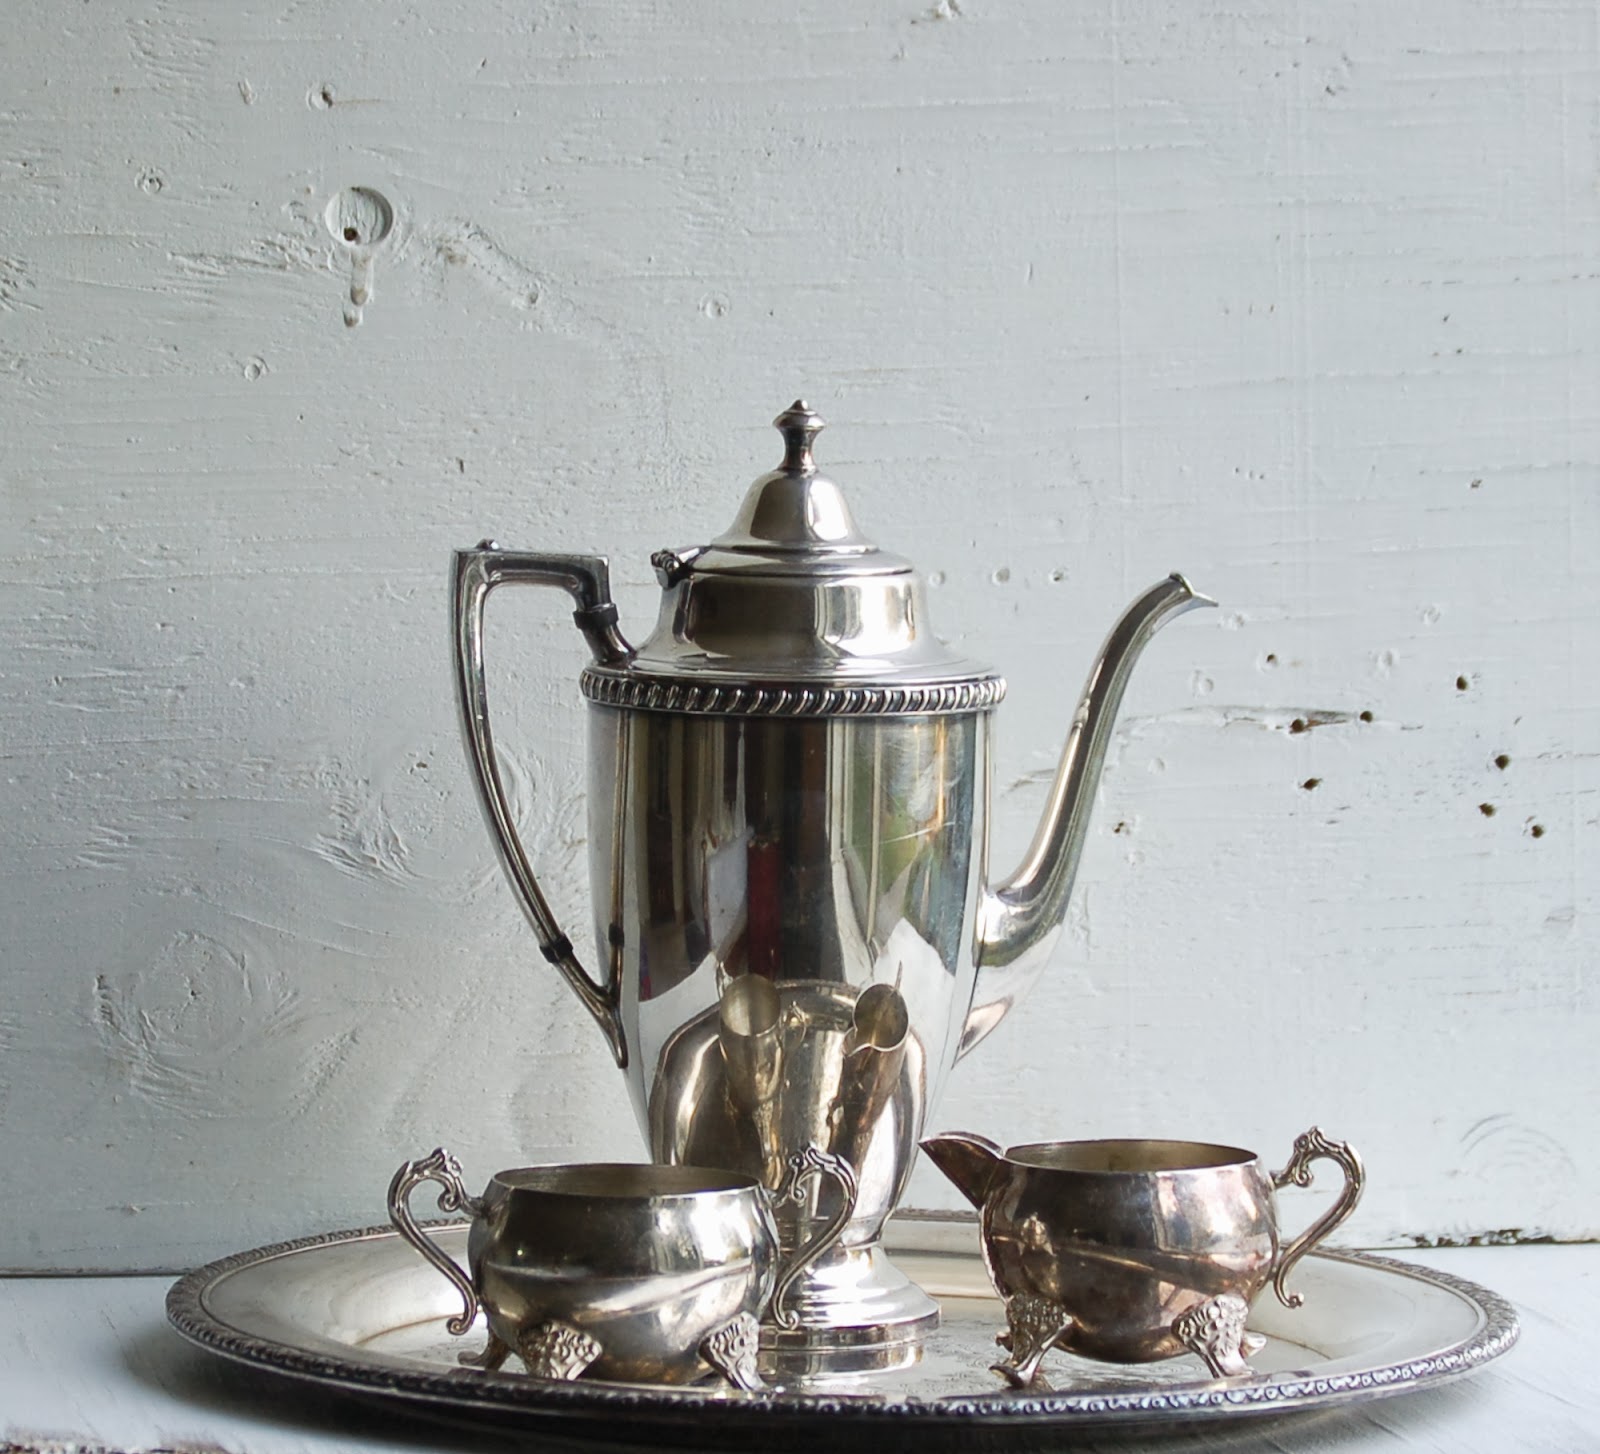 https://www.etsy.com/listing/174609833/vintage-silver-plated-tea-set-teapot?ref=shop_home_active_1&ga_search_query=tea